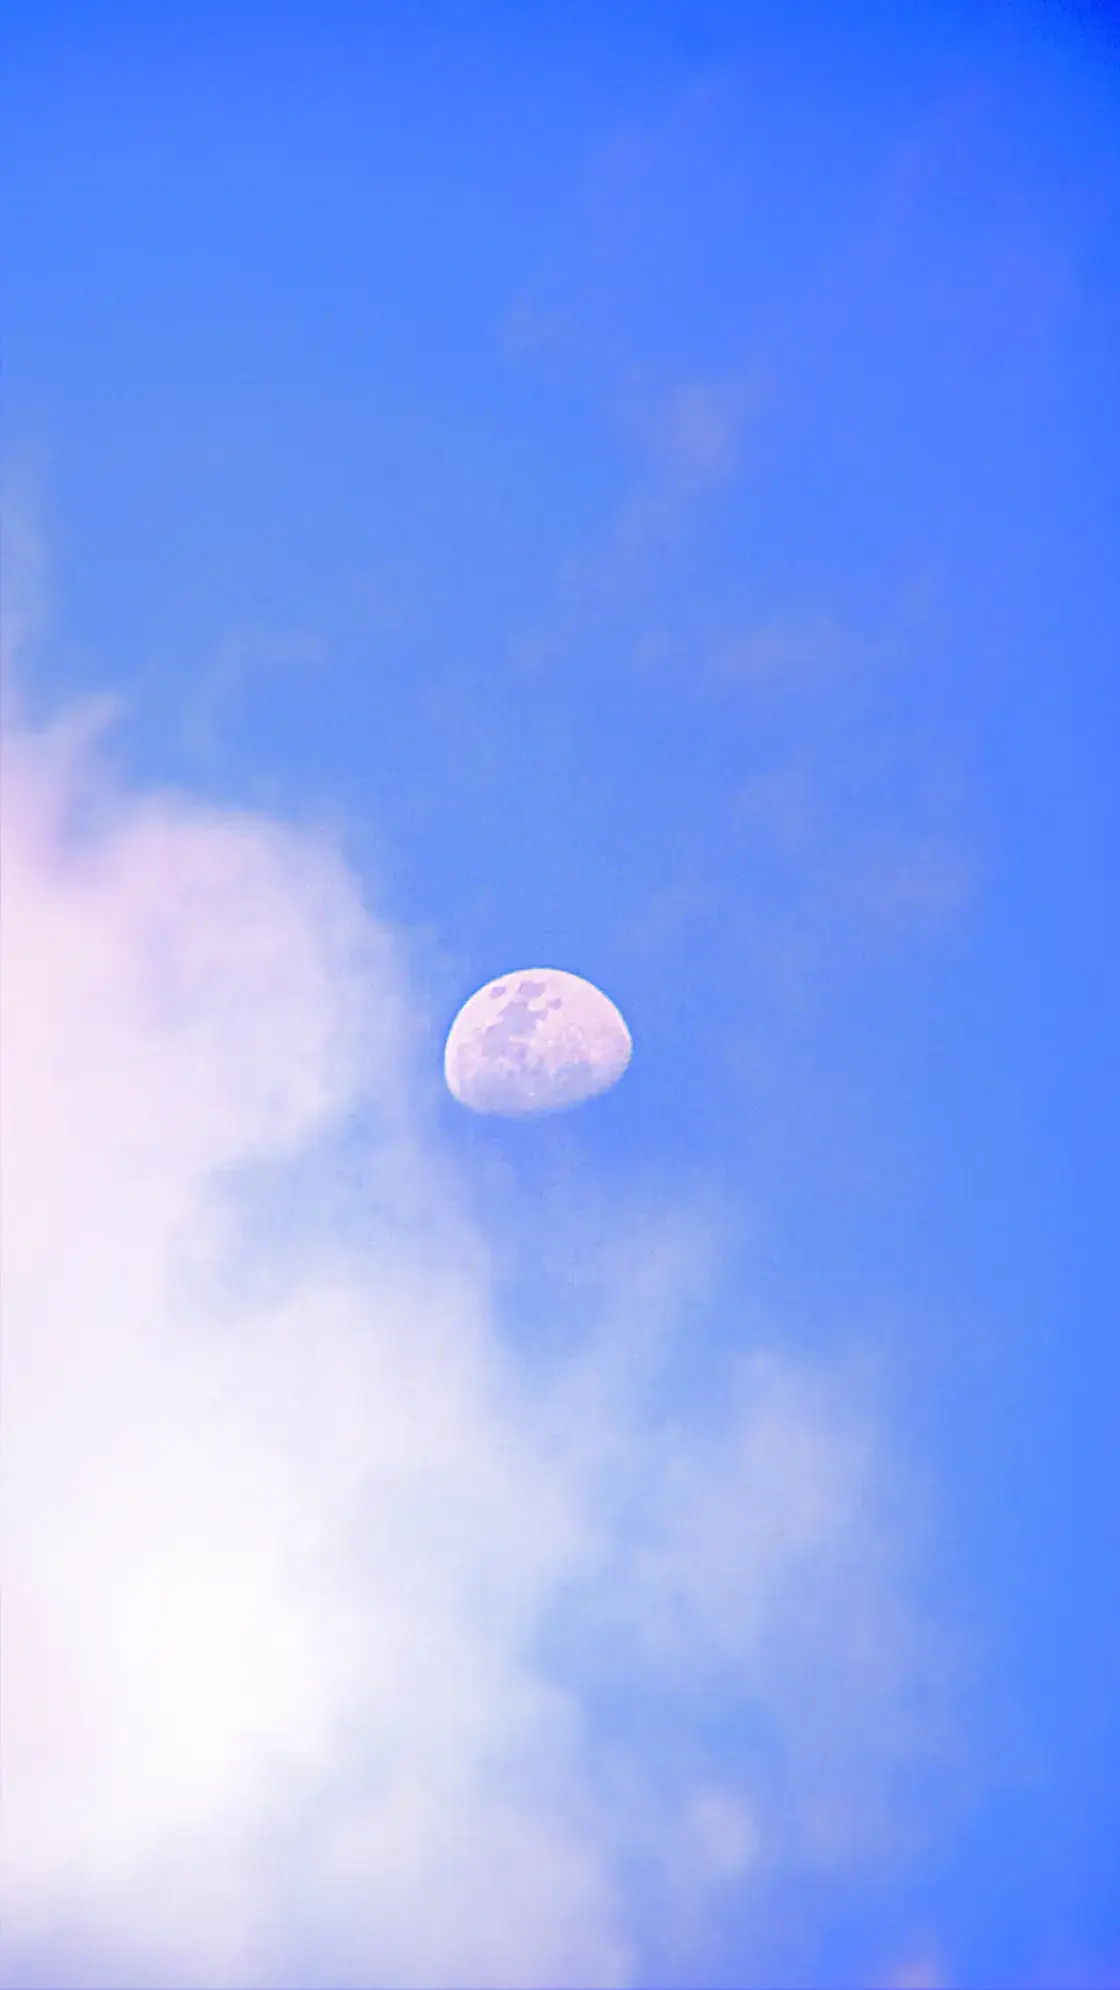 Mengagumi dan mencintai segala ciptakan Tuhan di berbagai suasana dan kondisi, MasyaAllah indah dan cantik langit sore hari ini✨ #moon#bluesky#quarter#🌗#langitaesthetic#sky#skylight#astrophile#selenophile#astronomy#astrophotography#clouds#xyzbca#foryourpage#fy#4u#masukberanda #apexel18xzoom#universe#thousandyears#moonligh#☁️✨